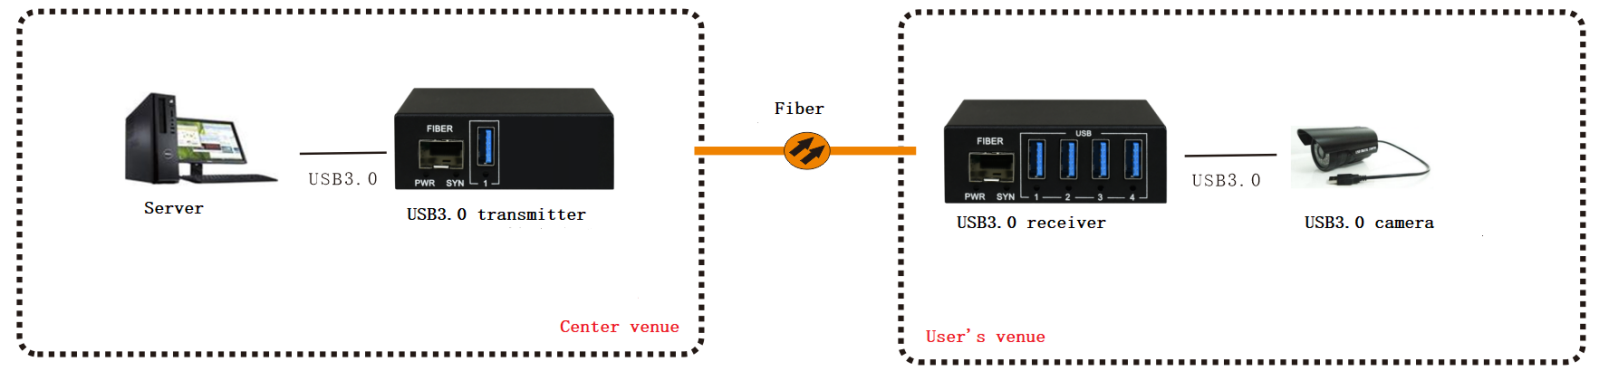 USB 3.0 Fiber Modem